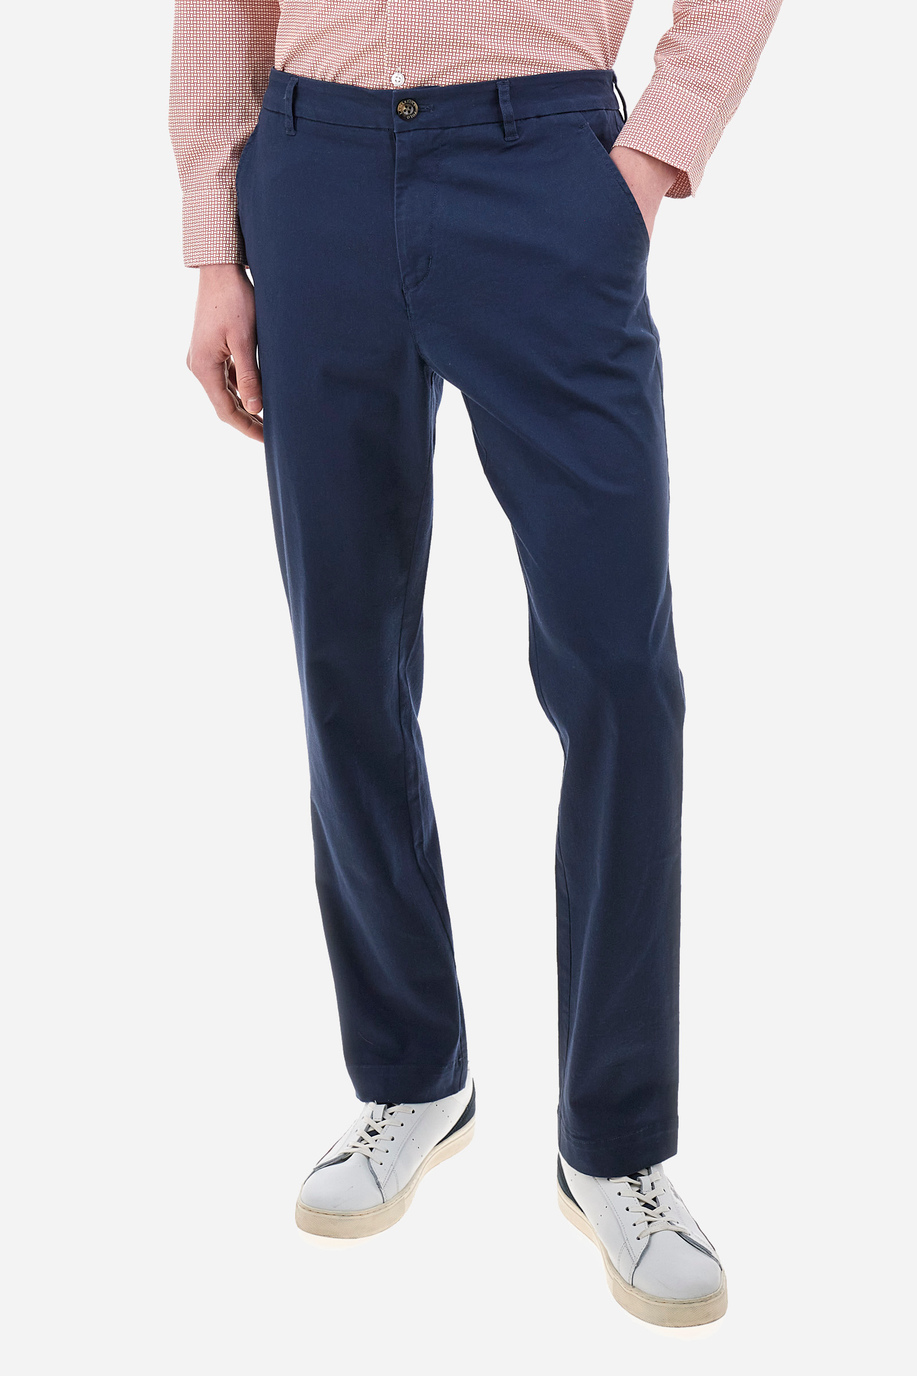 Pantalon chino homme coupe classique - Yirmeyahu - Trousers | La Martina - Official Online Shop